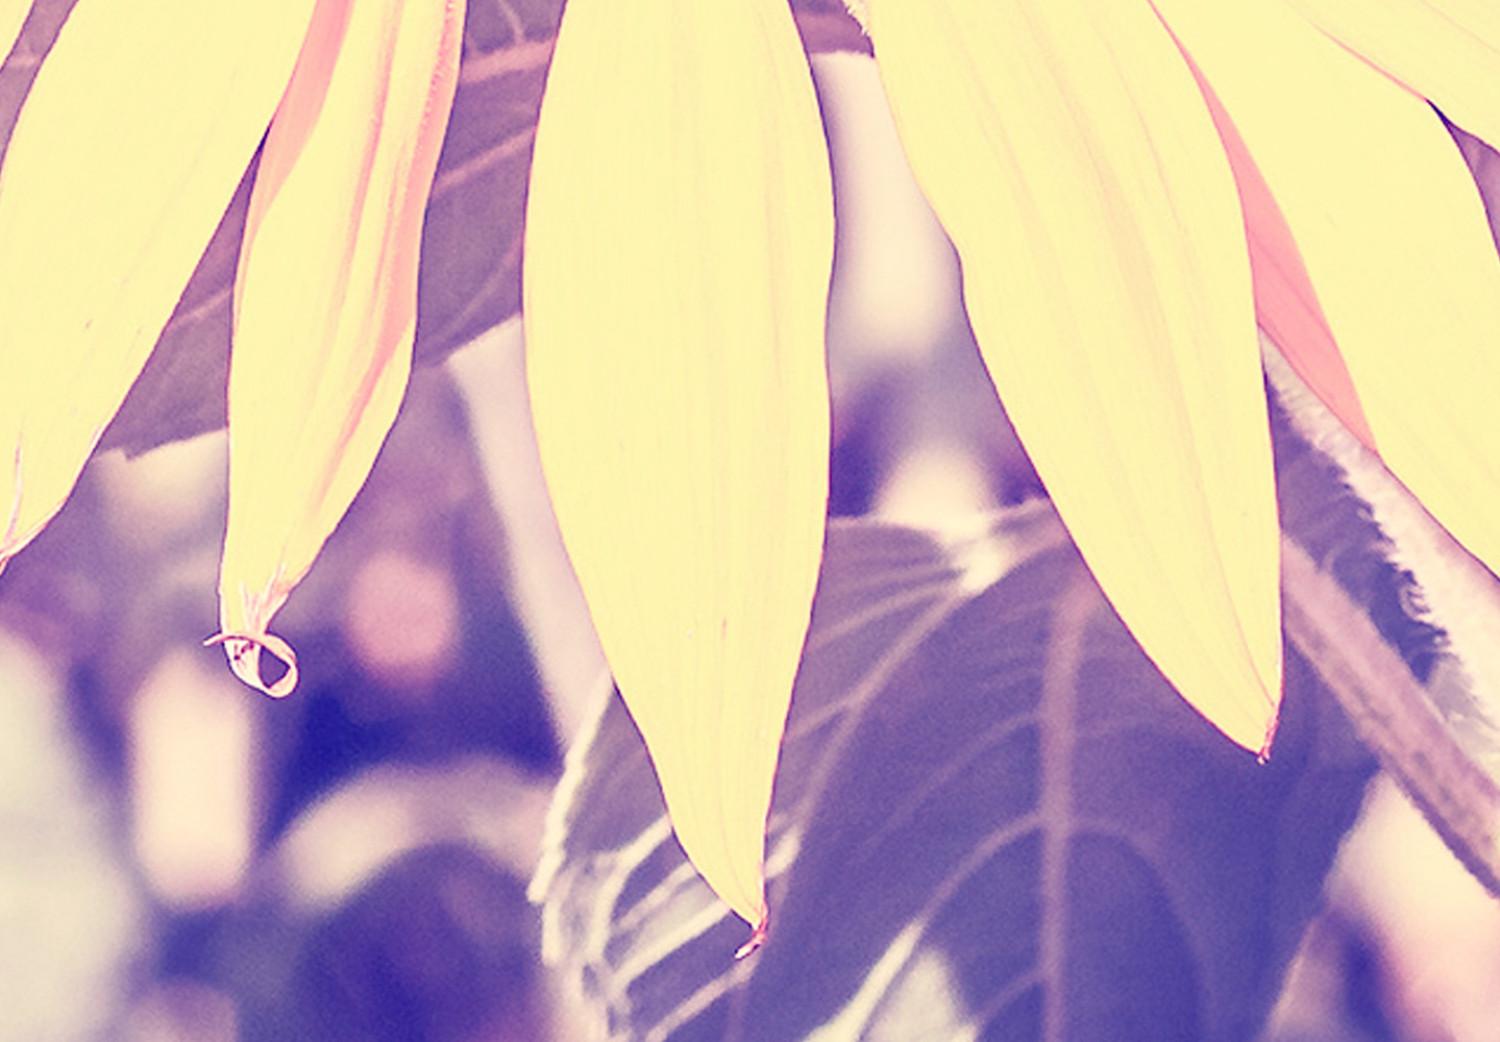 Cuadro decorativo Recuerdo de verano - flor de girasol en un campo con un brillo púrpura